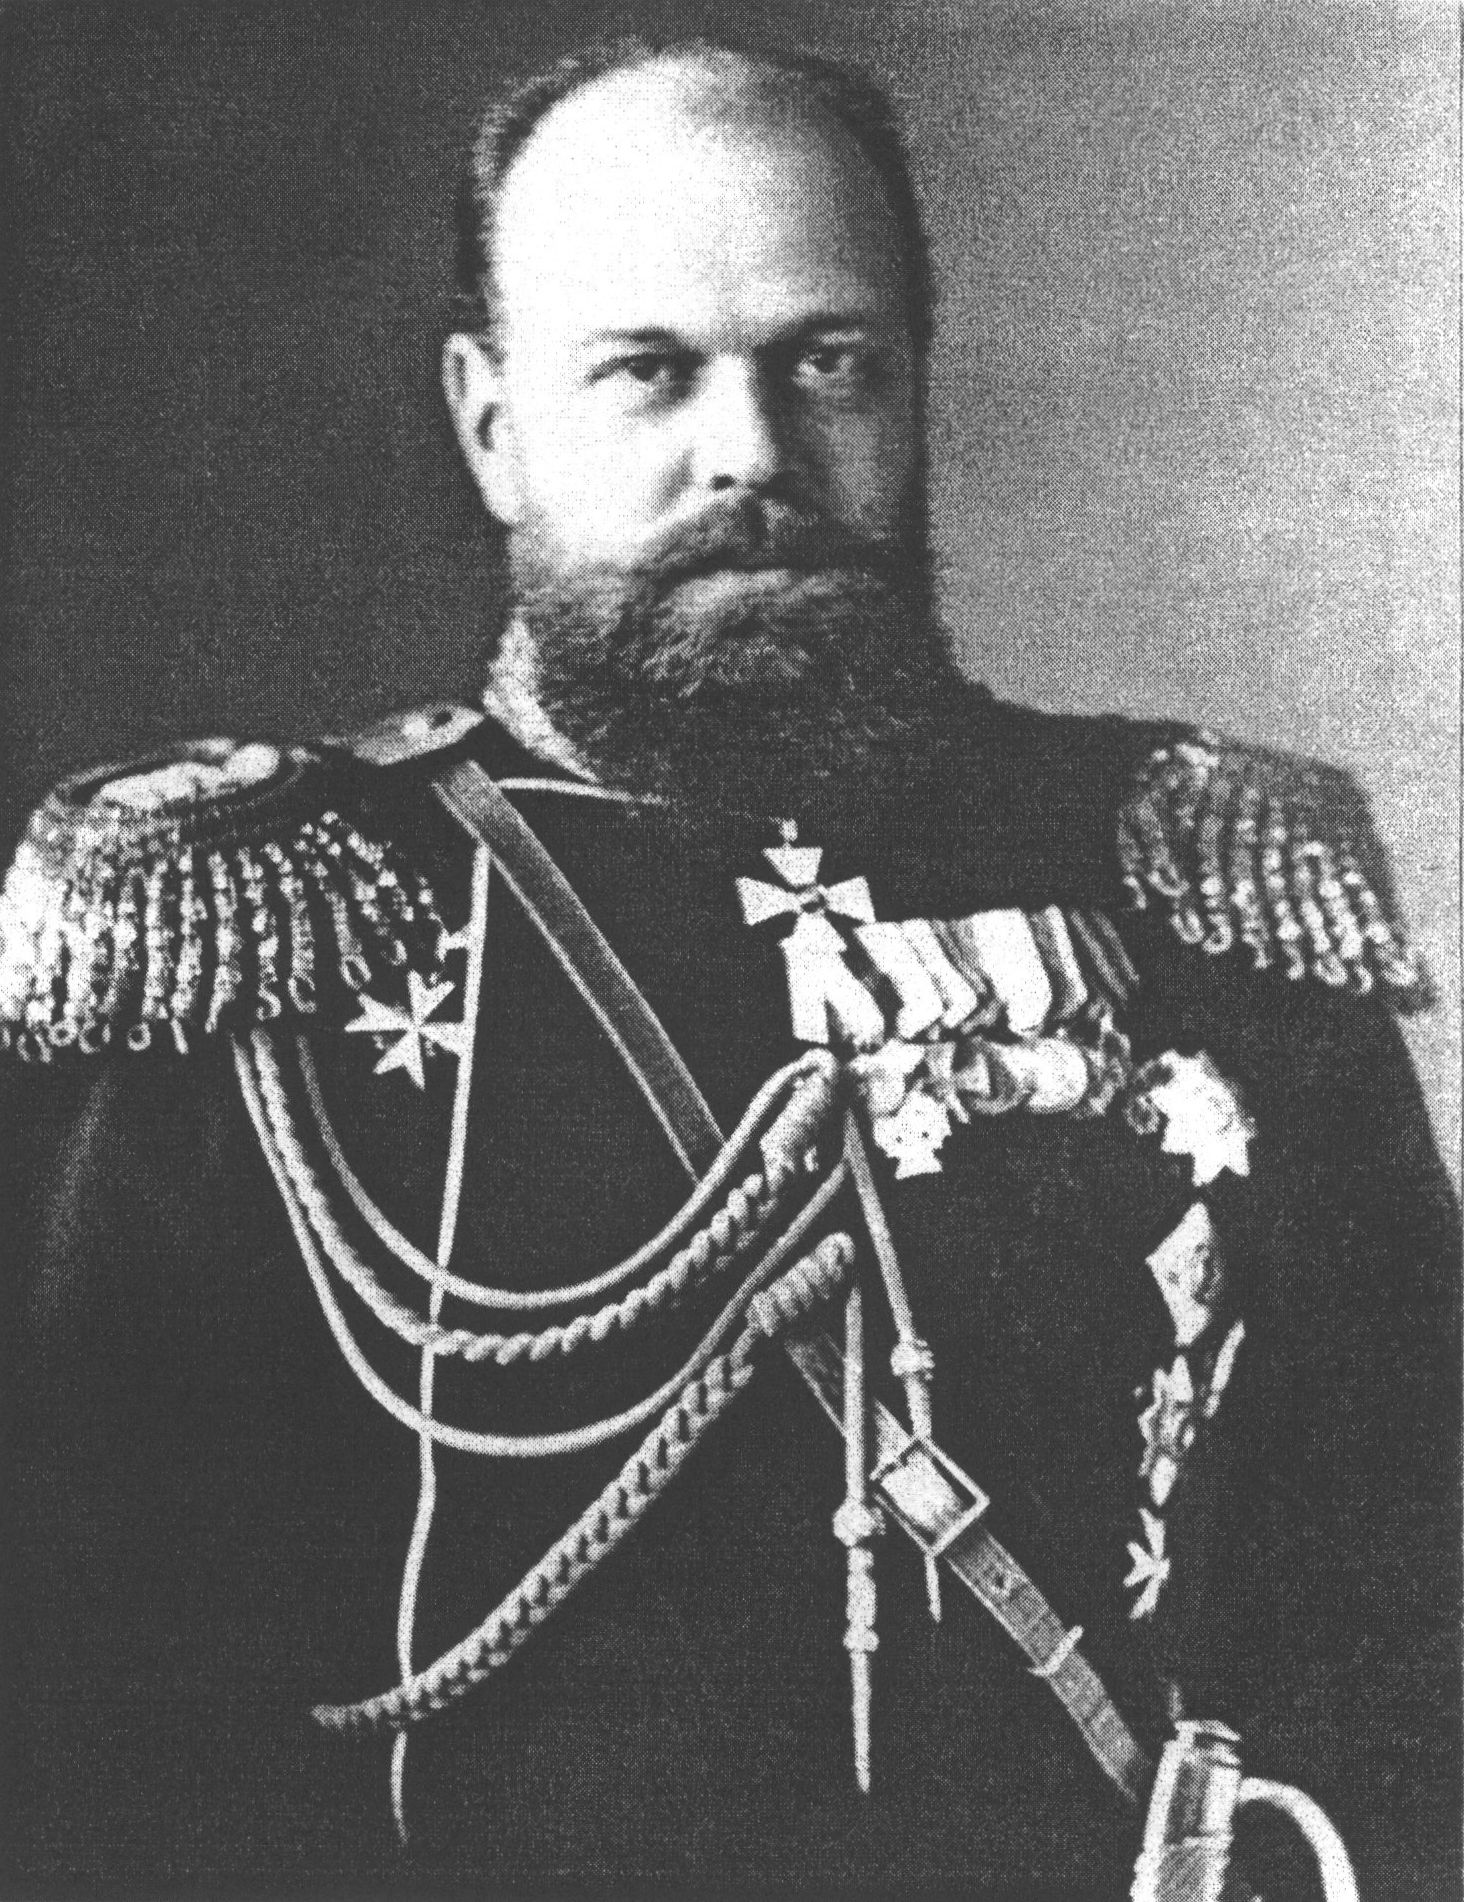 Император Александр III. 1845—1894. Emperor Alexander III (1845—1894)